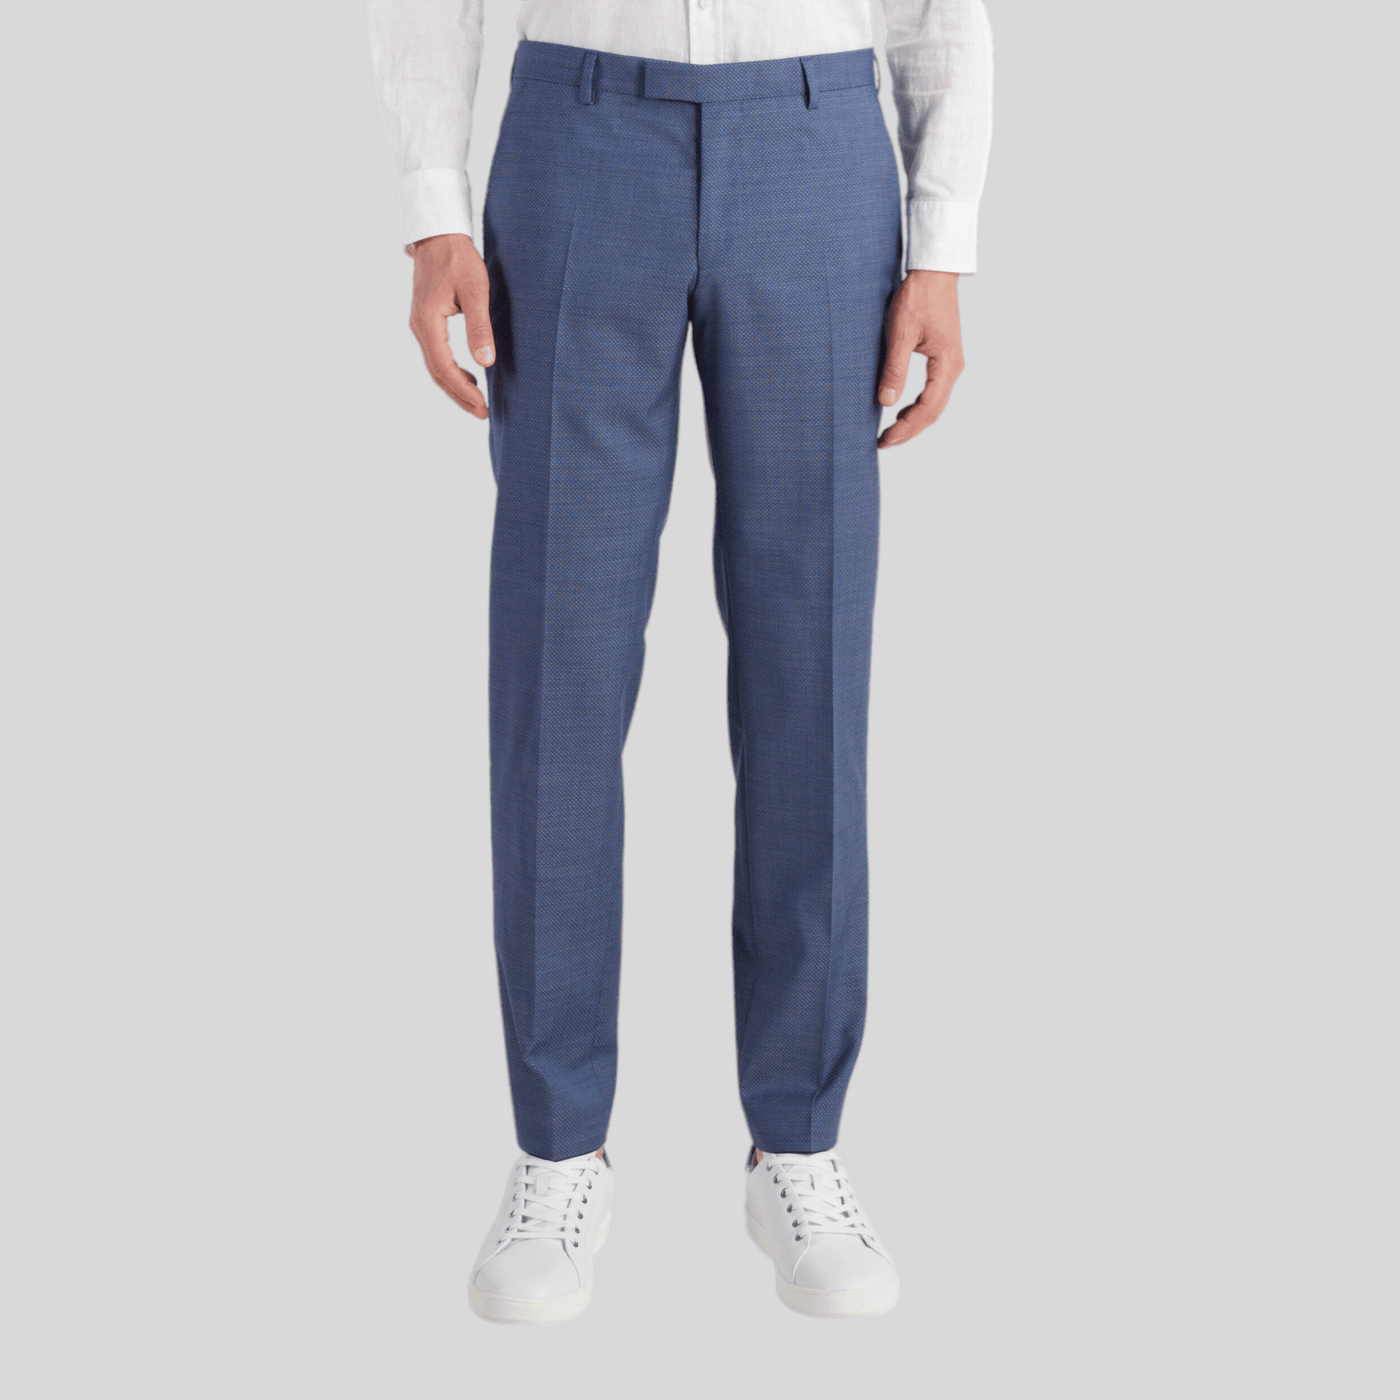 Gotstyle Fashion - Joop! Pants Textured Wool Pant - Blue